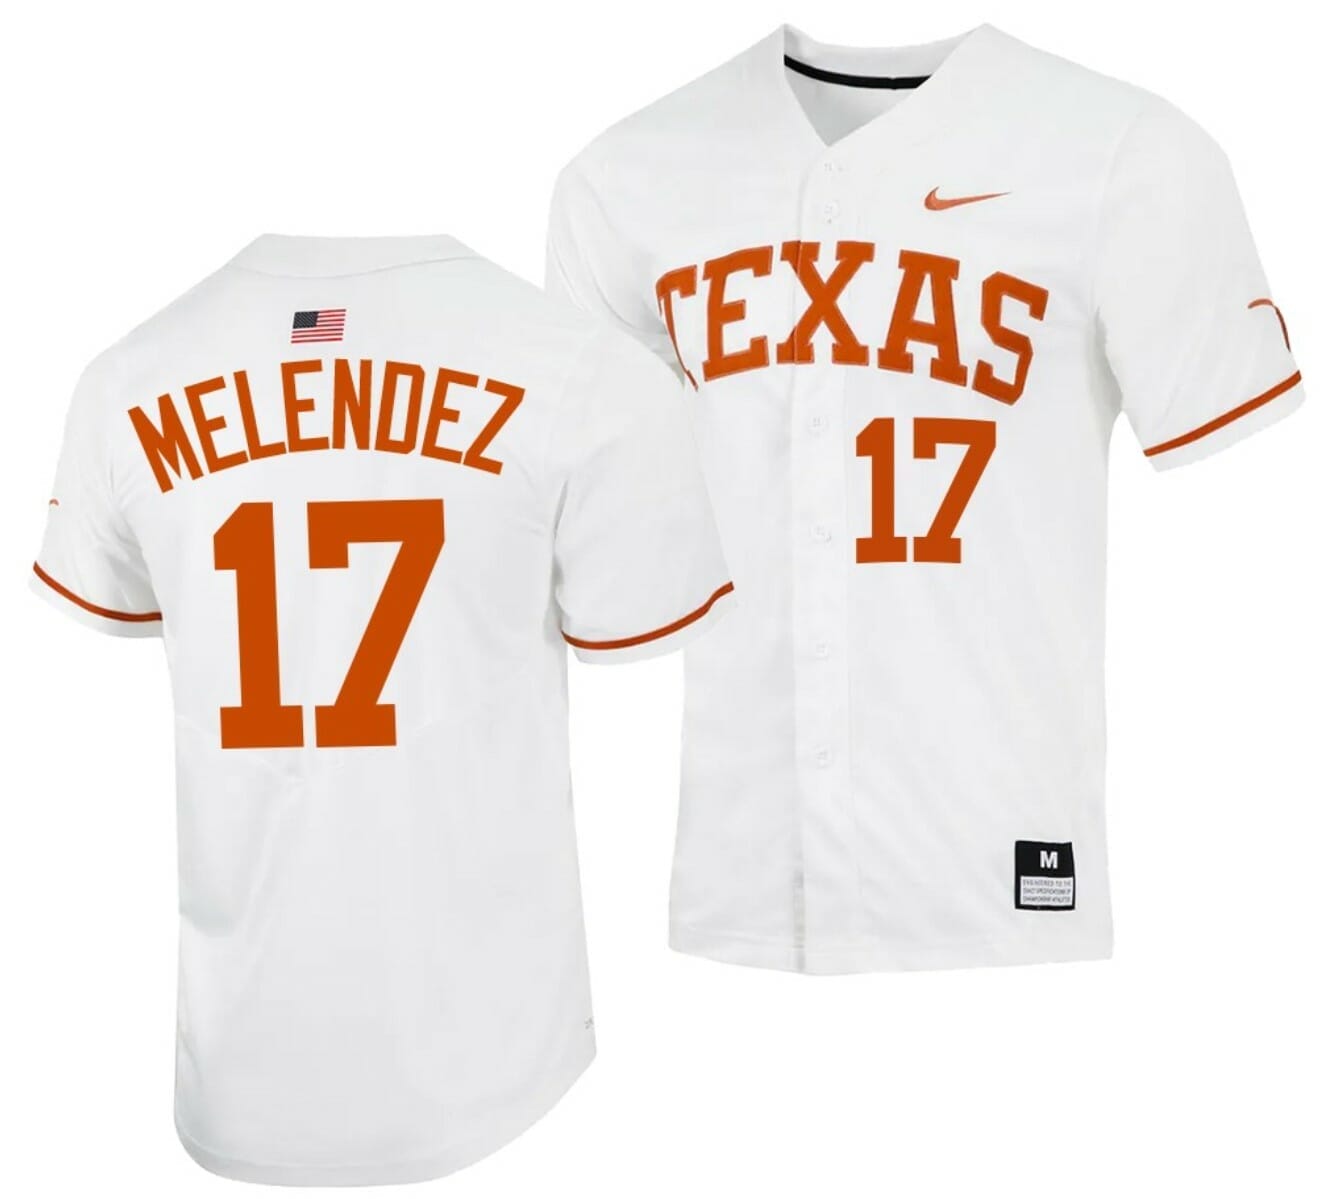 Baseball Texas Longhorns NCAA Jerseys for sale